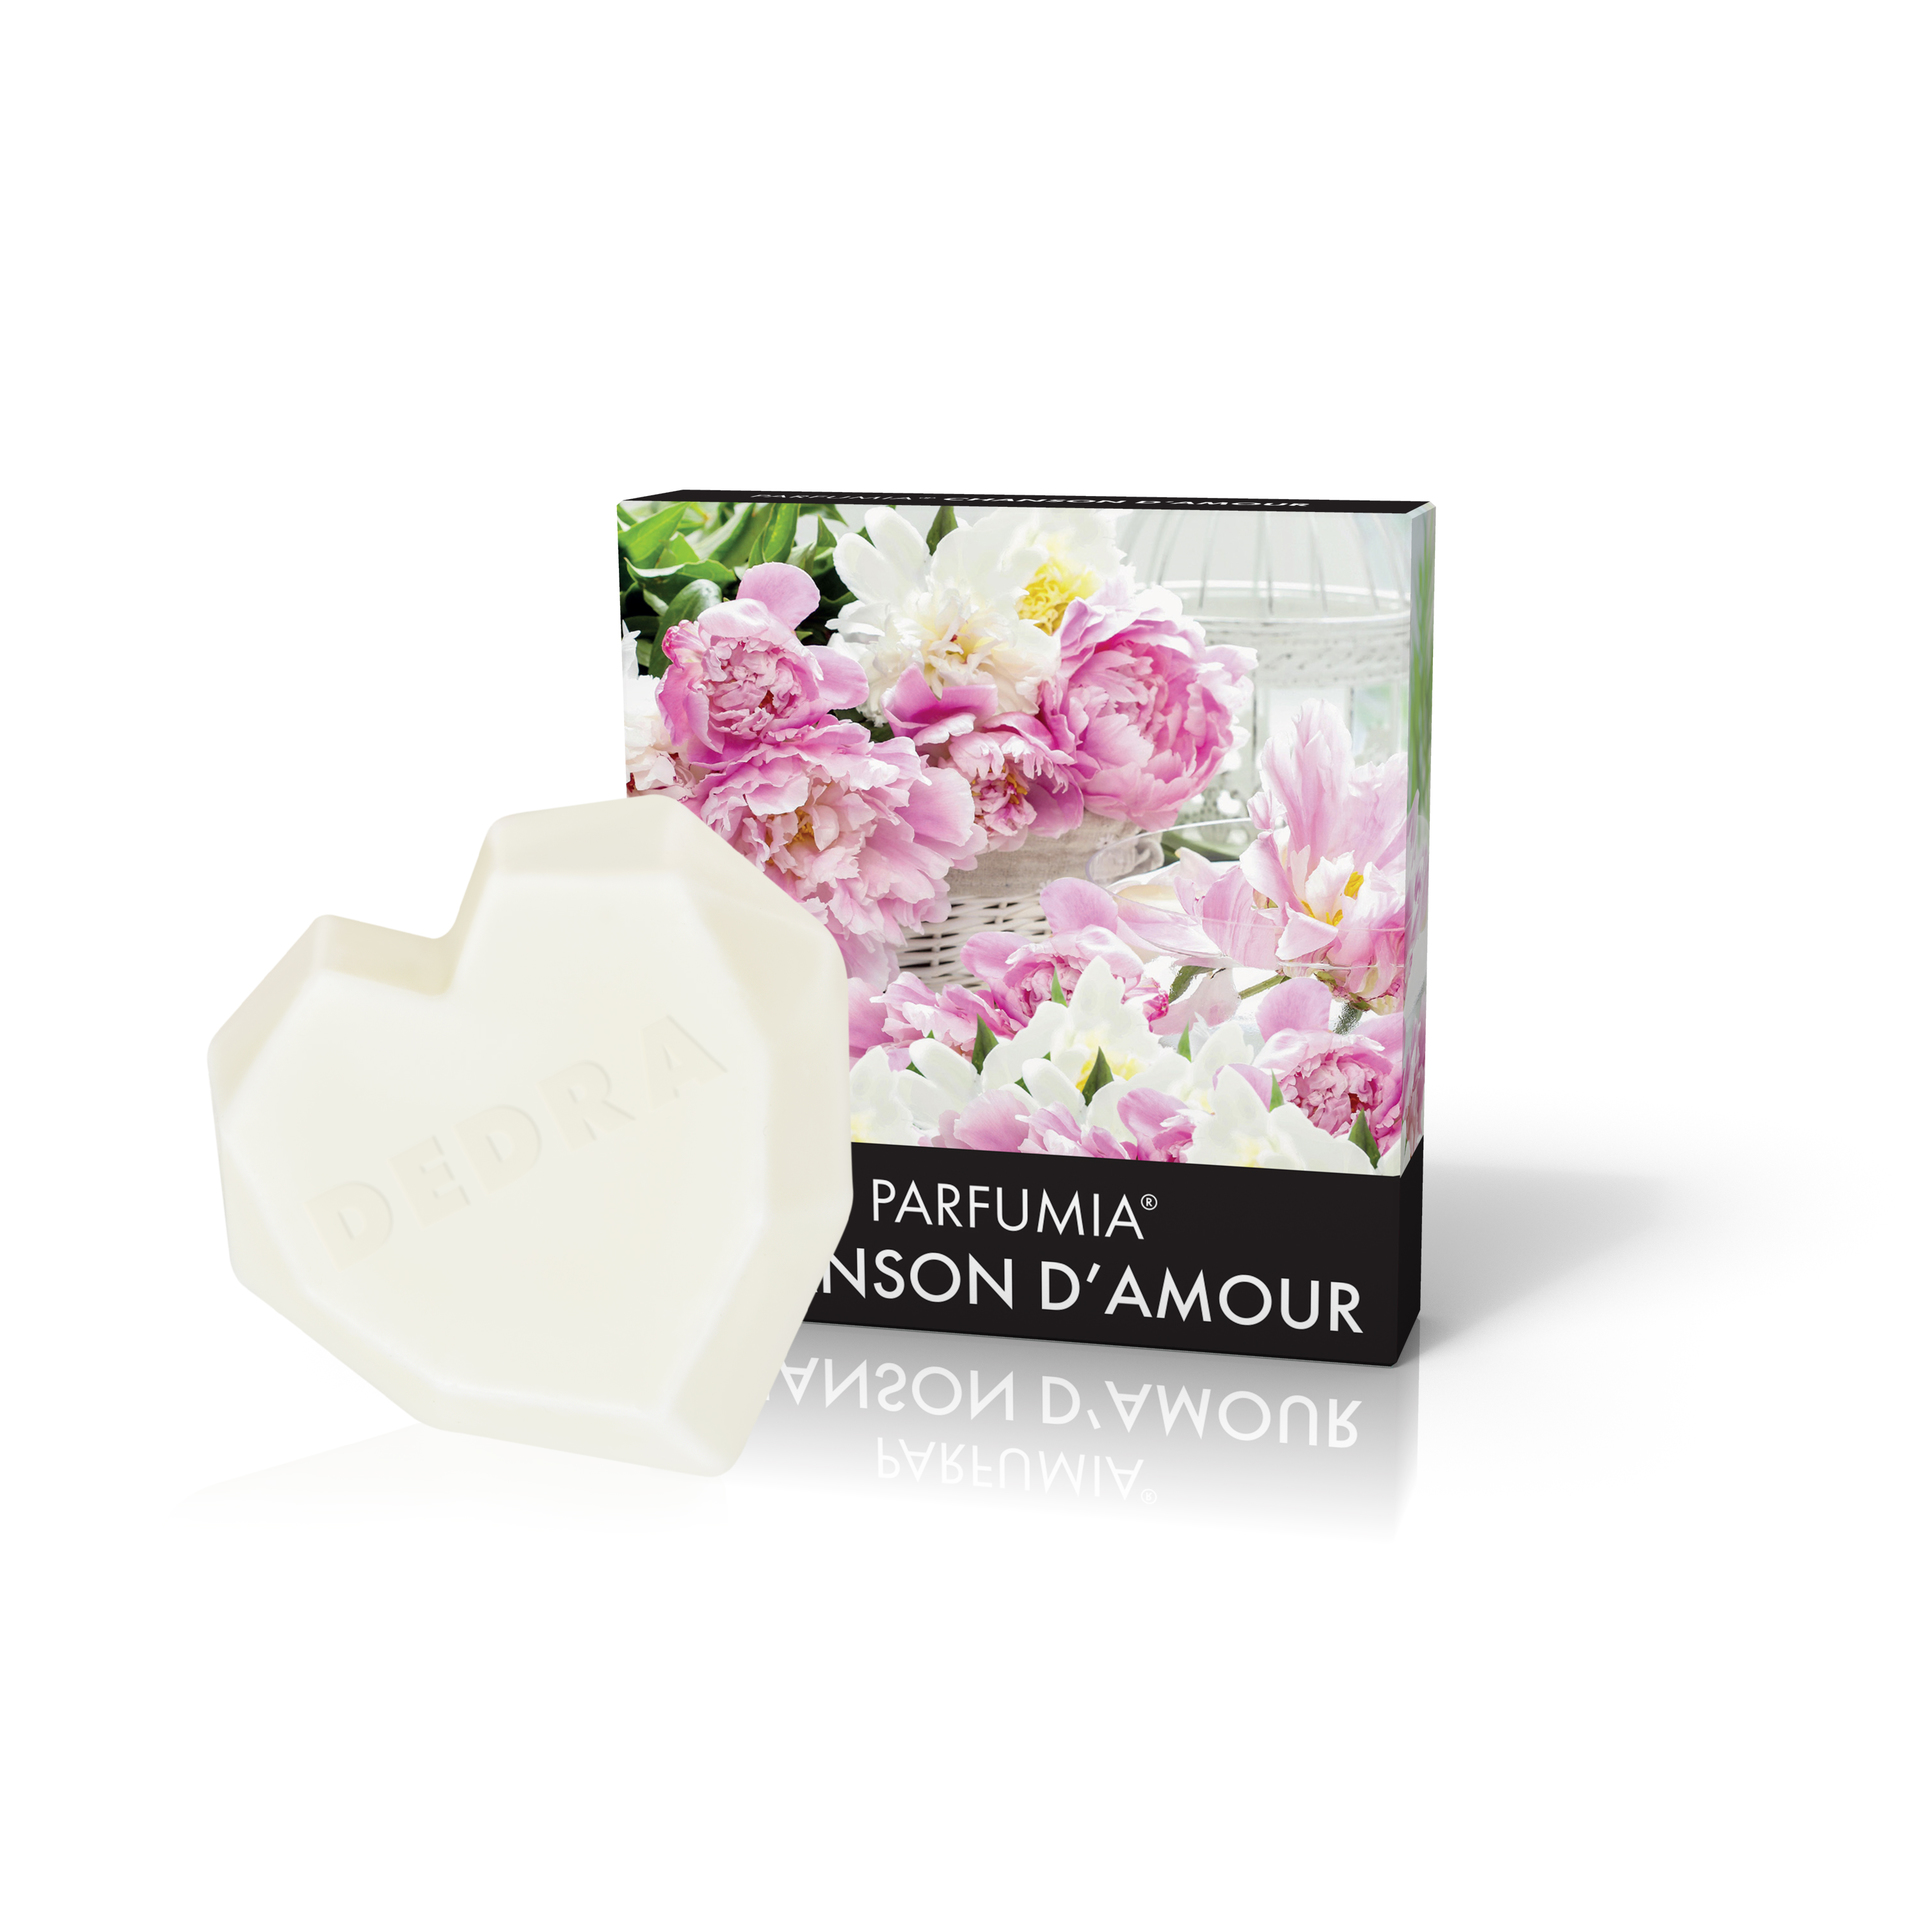 Vonný sójový EKO vosk Parfumia CHANSON D’AMOUR